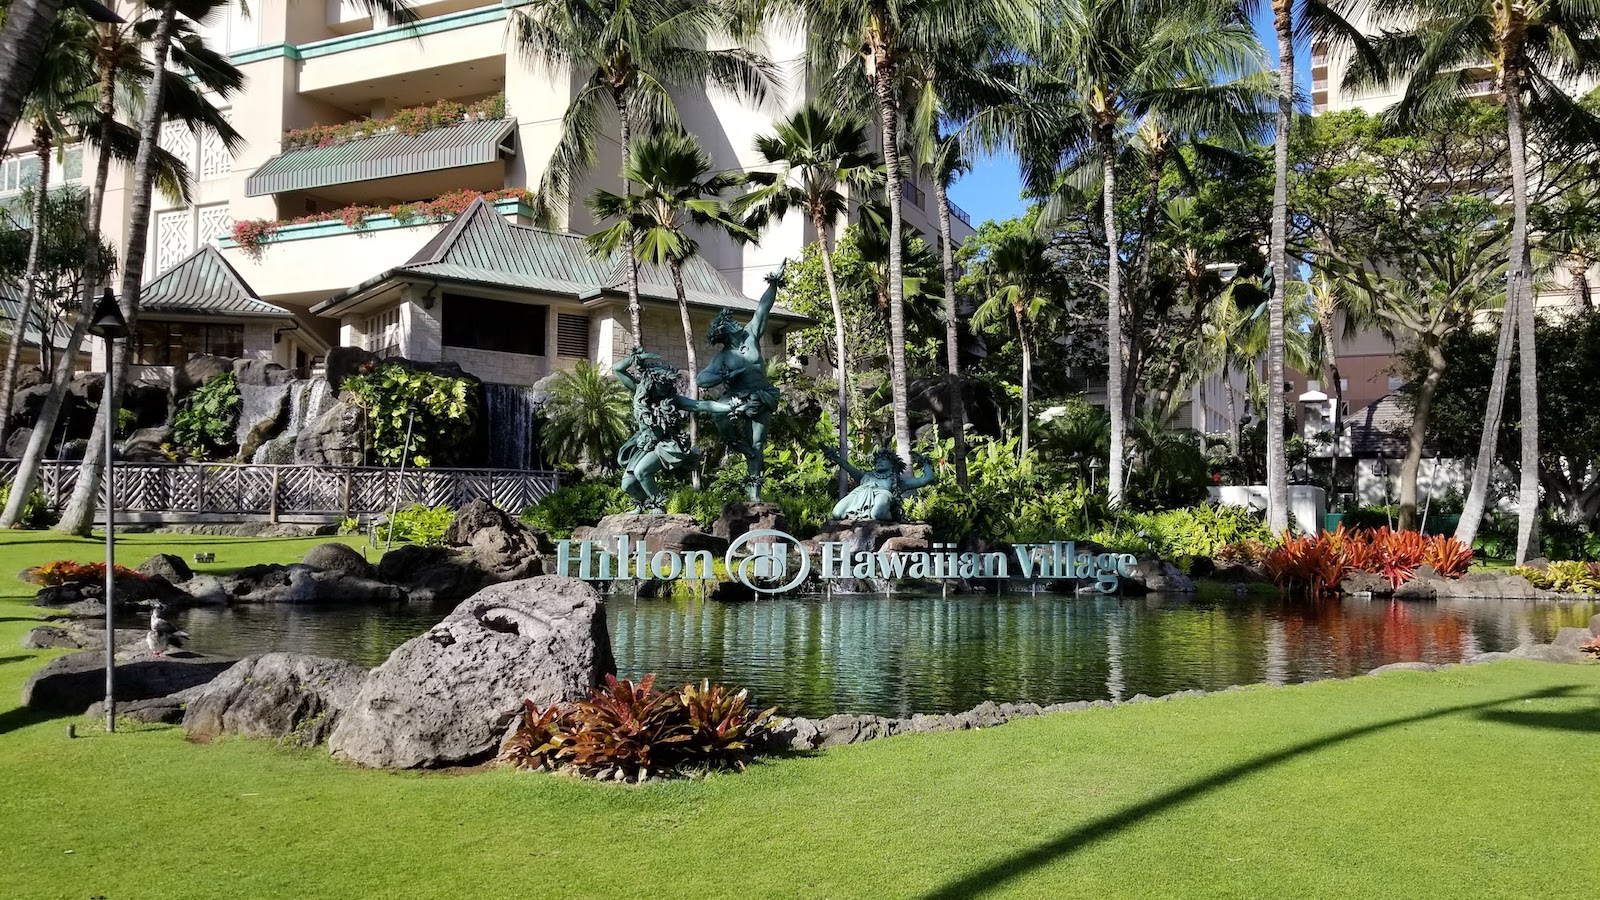 Hilton Grand Vacation Club at Hilton Hawaiian Village Oahu